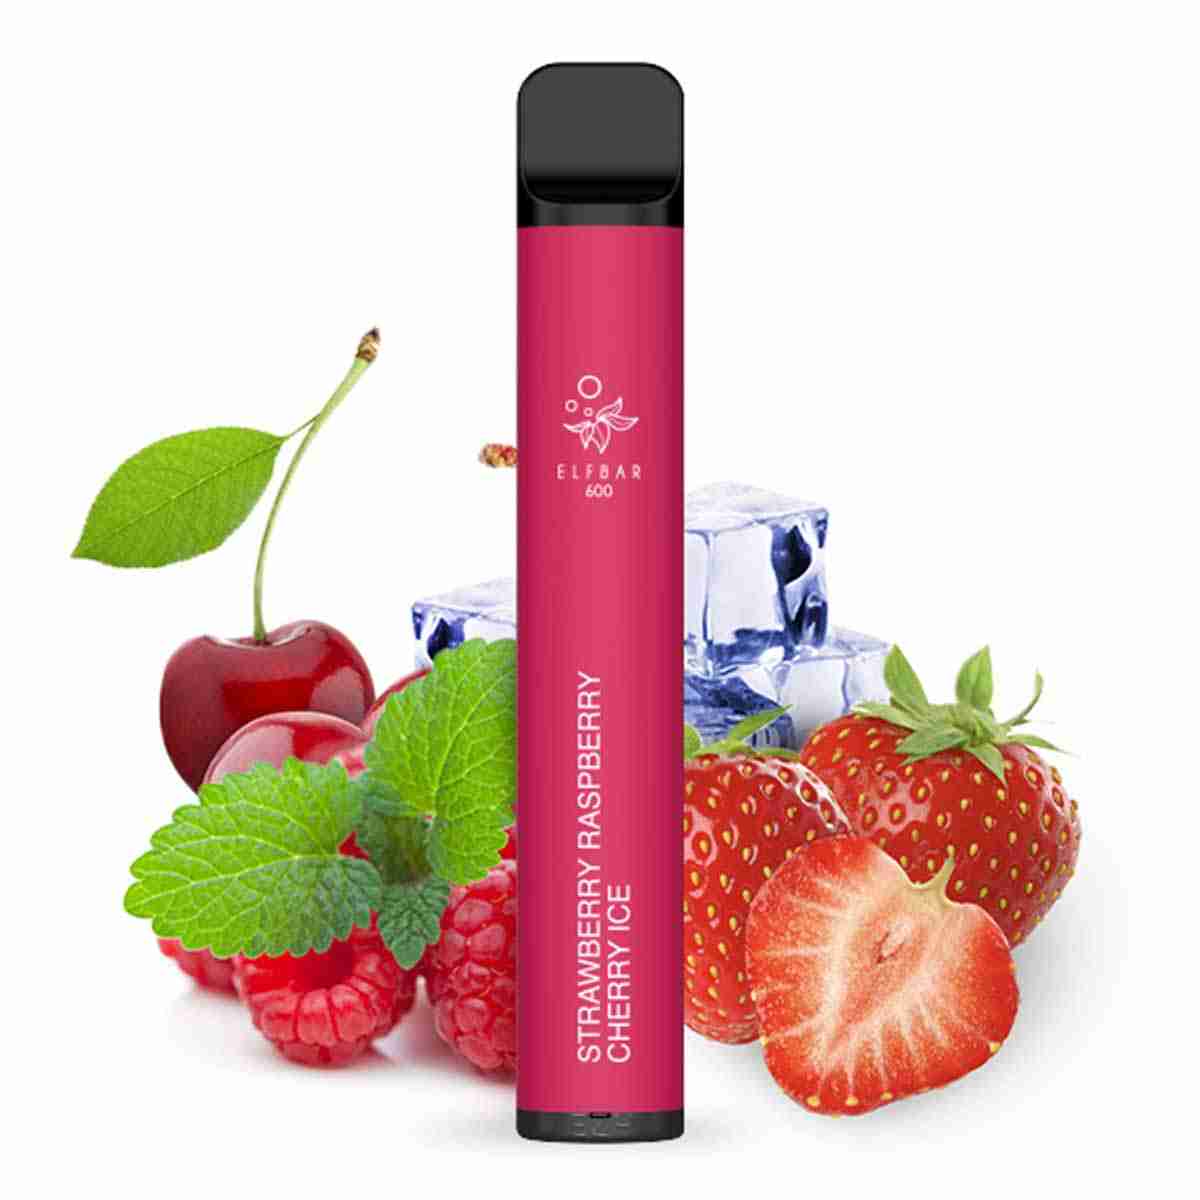 ELF BAR – Strawberry Raspberry Cherry Ice